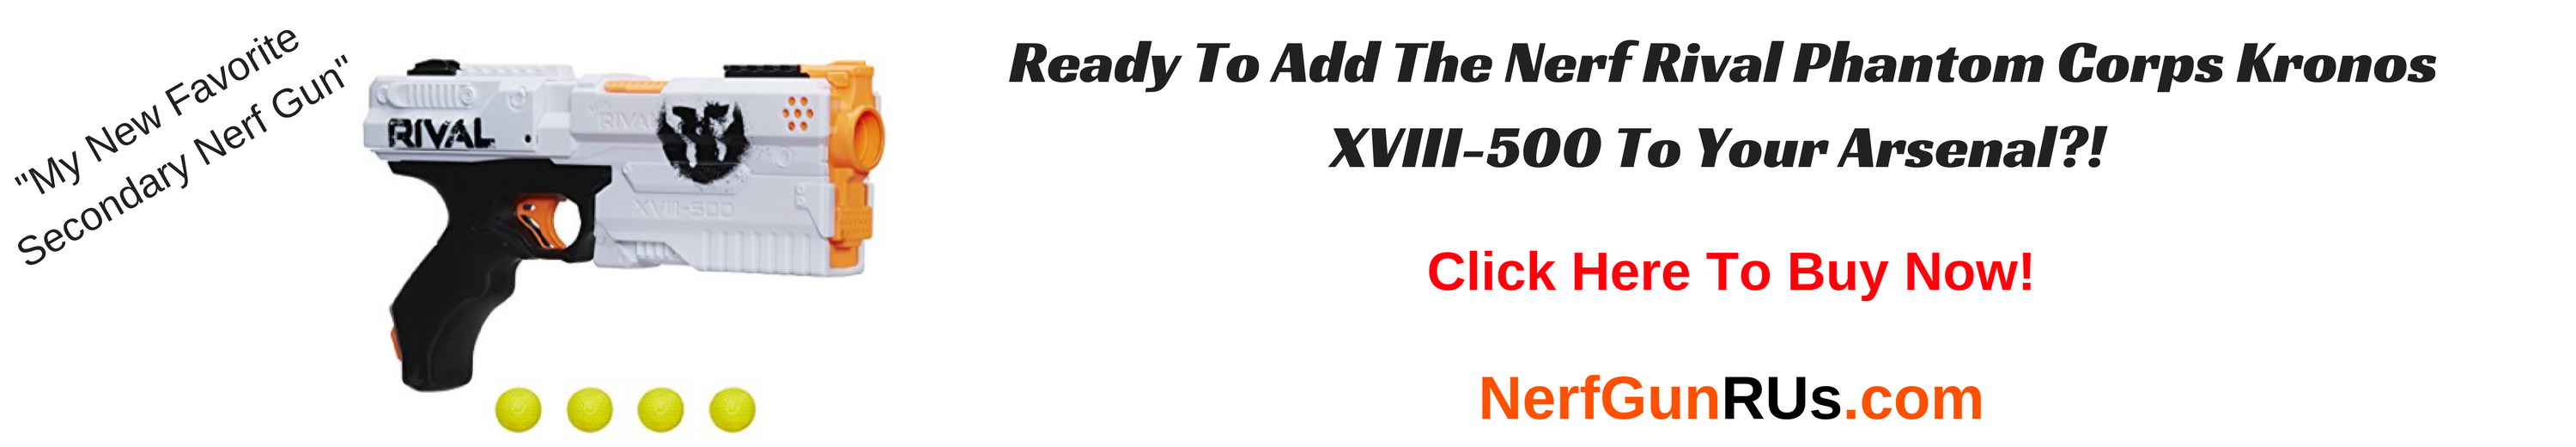 Ready To Add The Nerf Rival Phantom Corps Kronos XVIII-500 To Your Arsenal | NerfGunRus.com